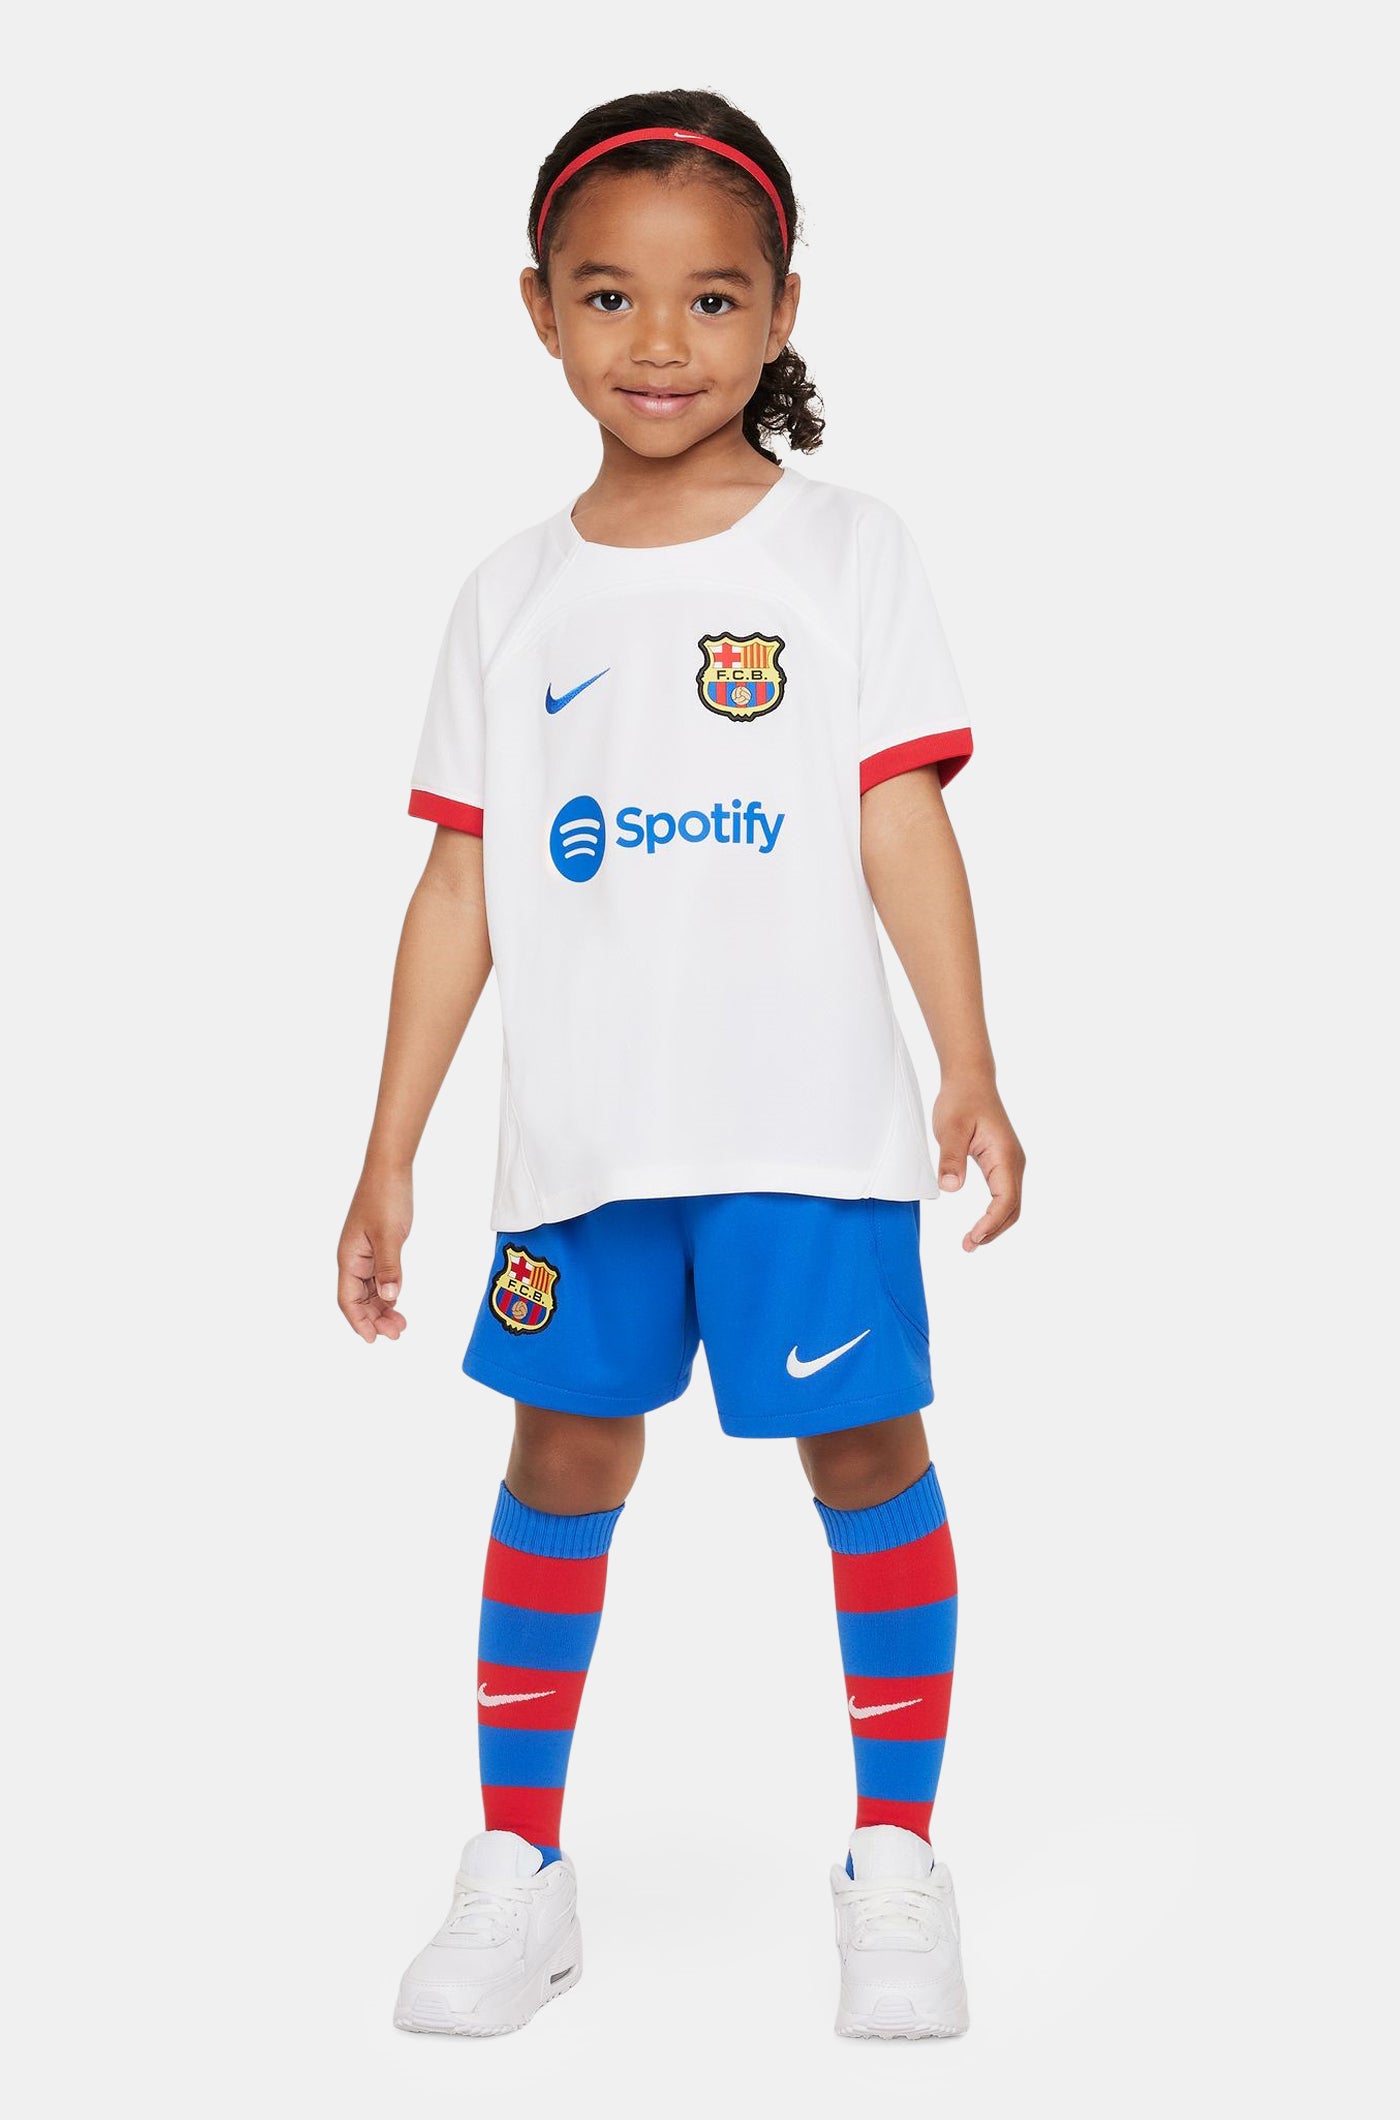 FC Barcelona away Kit 23/24 – Younger Kids  - O. BATLLE